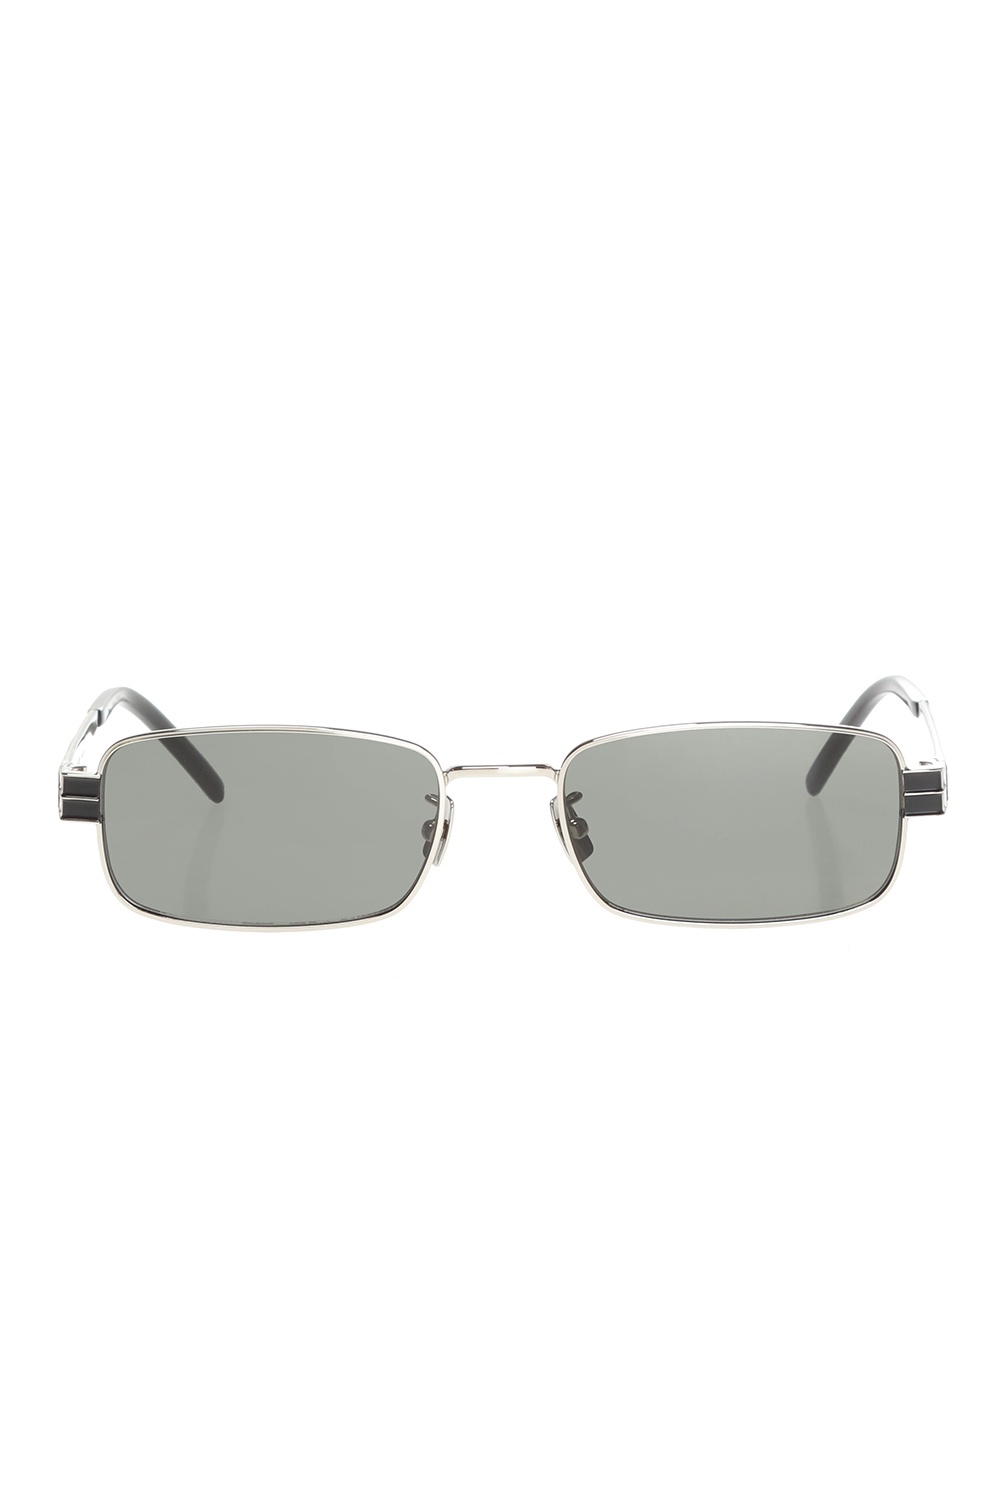 Saint Laurent Men's Sunglasses Irregular Rimless Silver/Grey SL 422-00